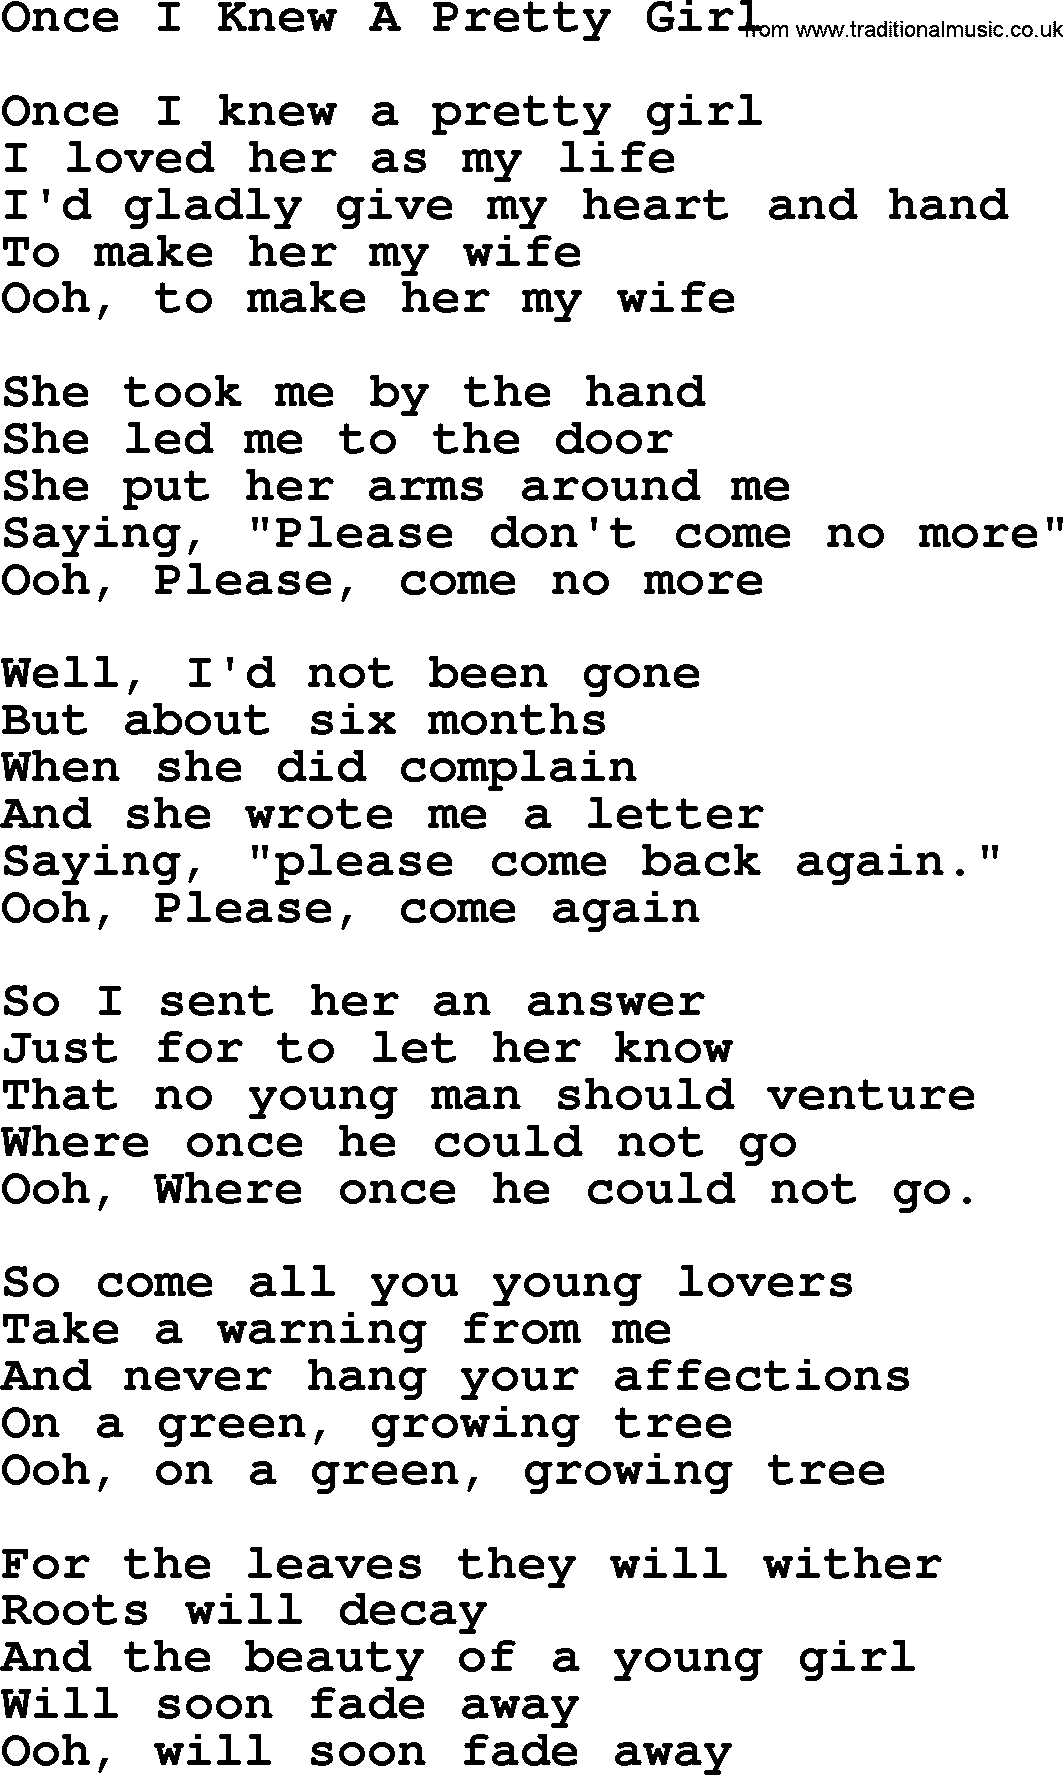 Joan Baez song Once I Knew A Pretty Girl, lyrics